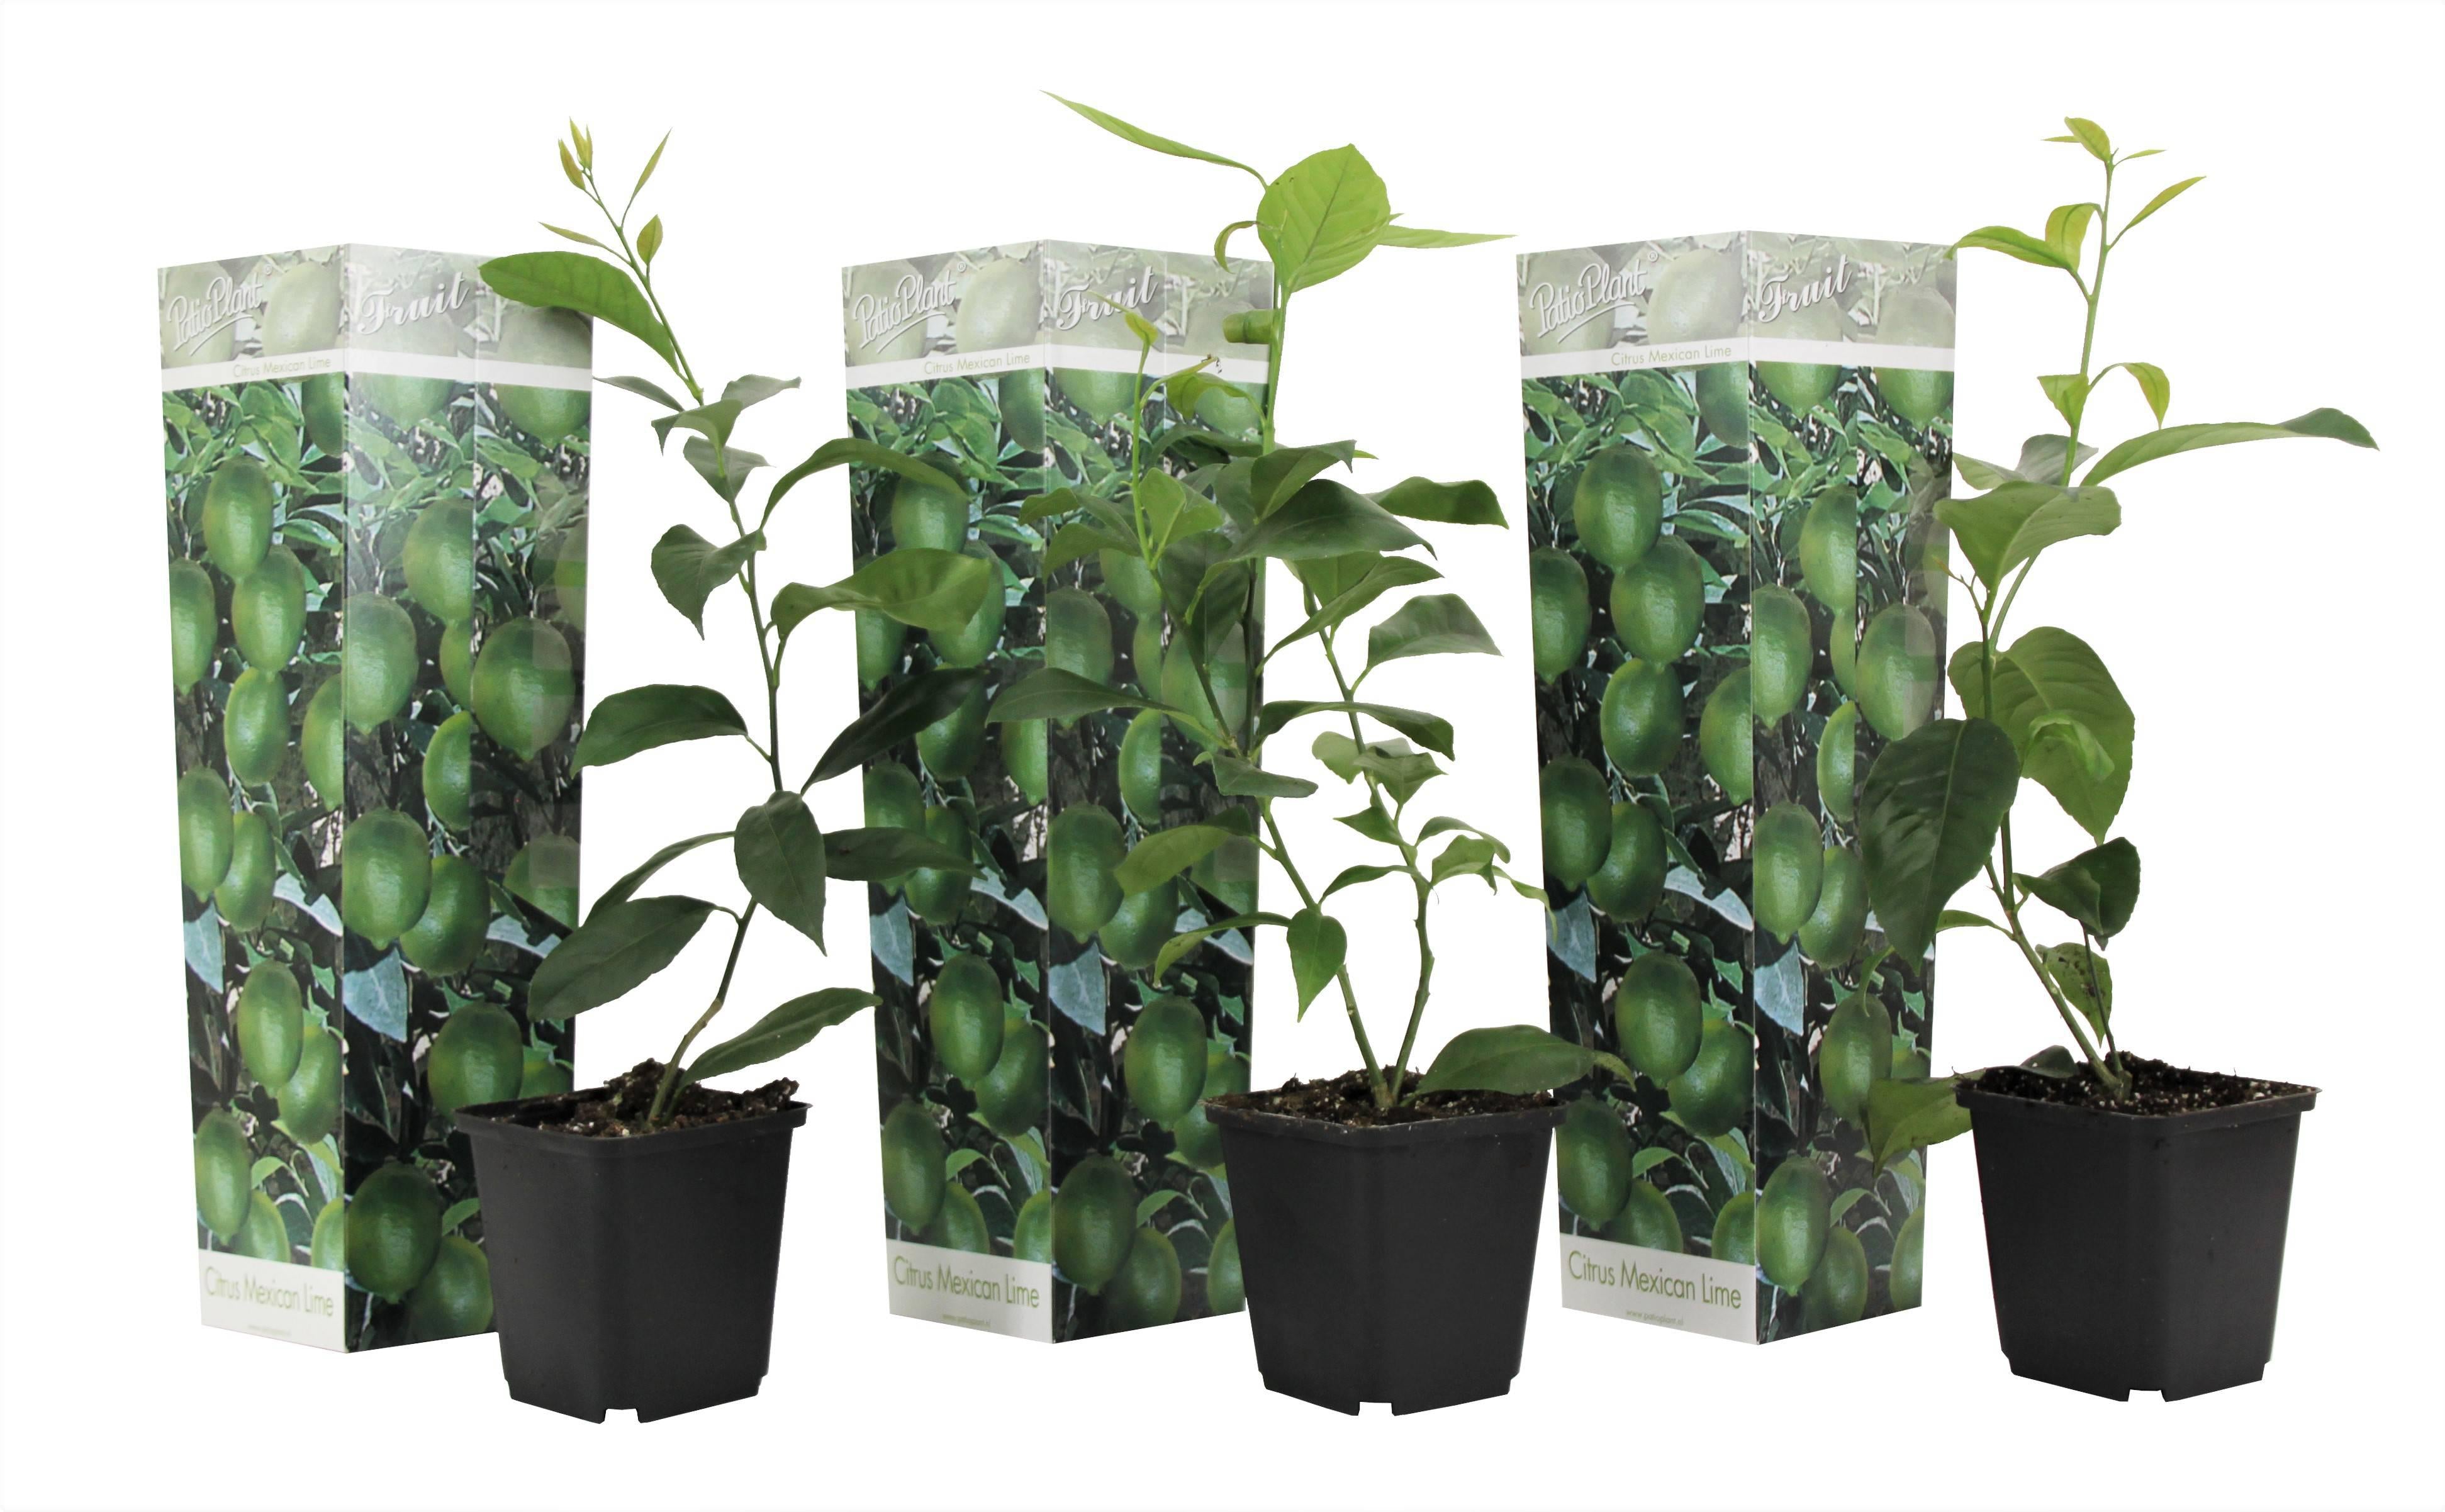 Toeval lijst straf Perfect Plant - Set van 3 Citrus Limoen planten citrus aurantifolia lime -  NADUVI